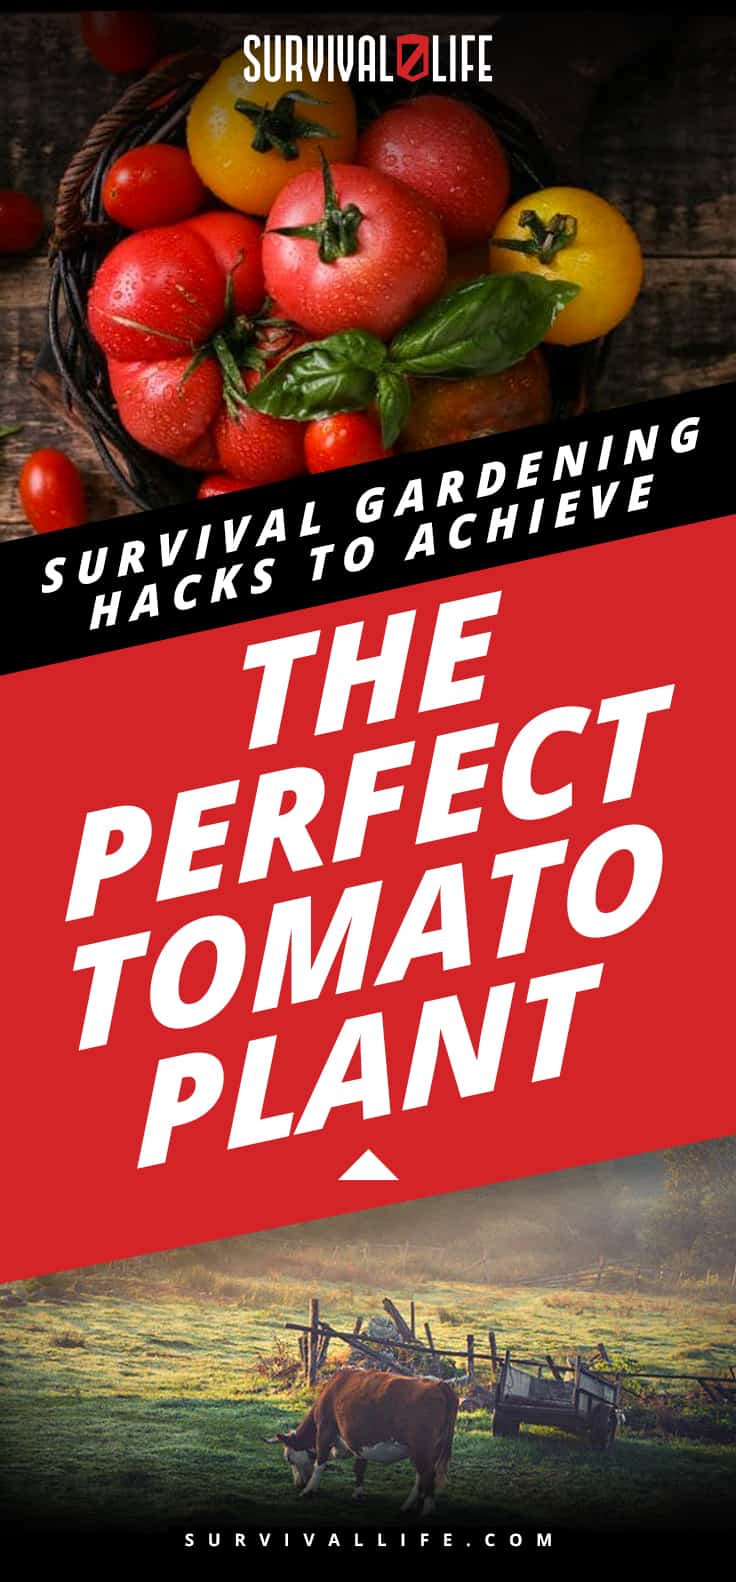 Survival Gardening Hacks To Achieve The Perfect Tomato Plant